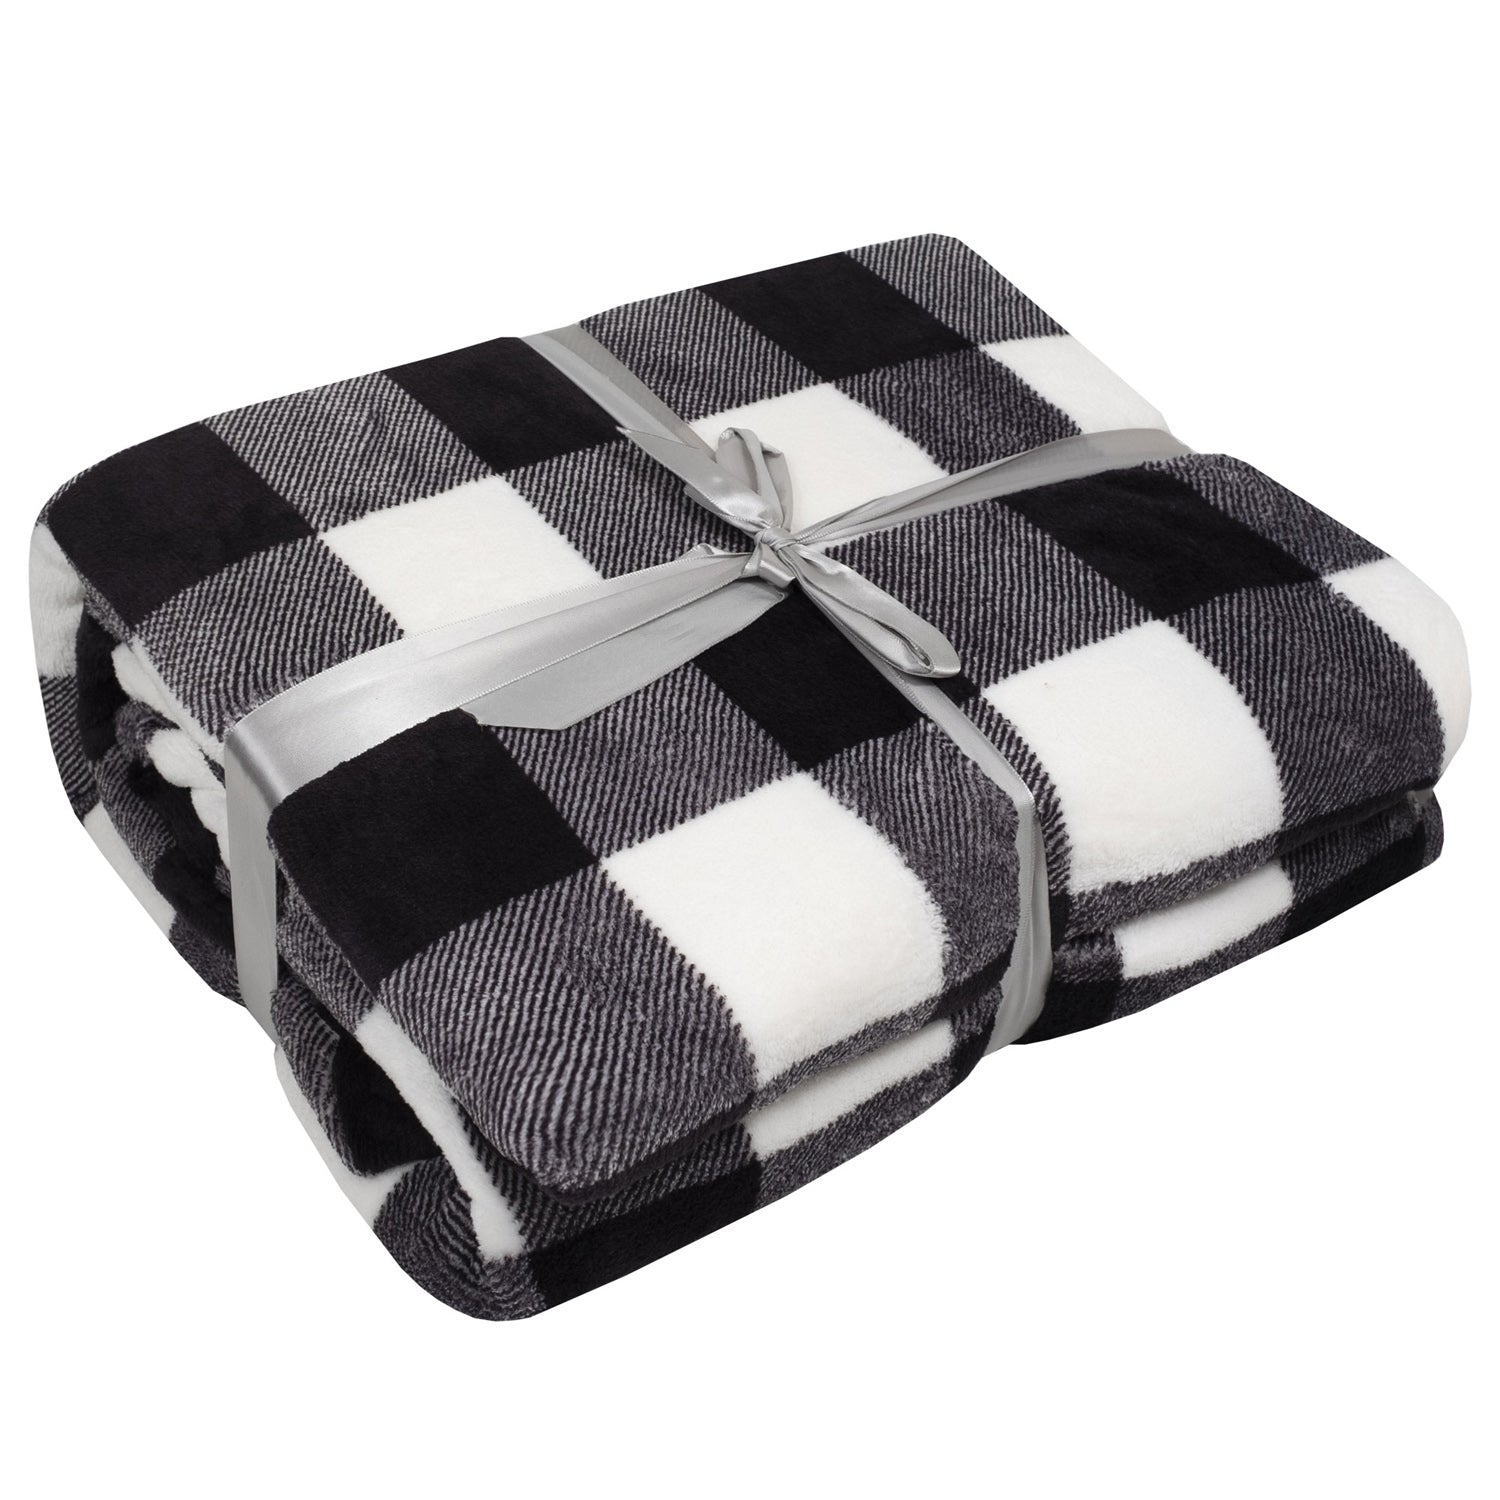 Buffalo Check Fleece Blanket Black White - Folded